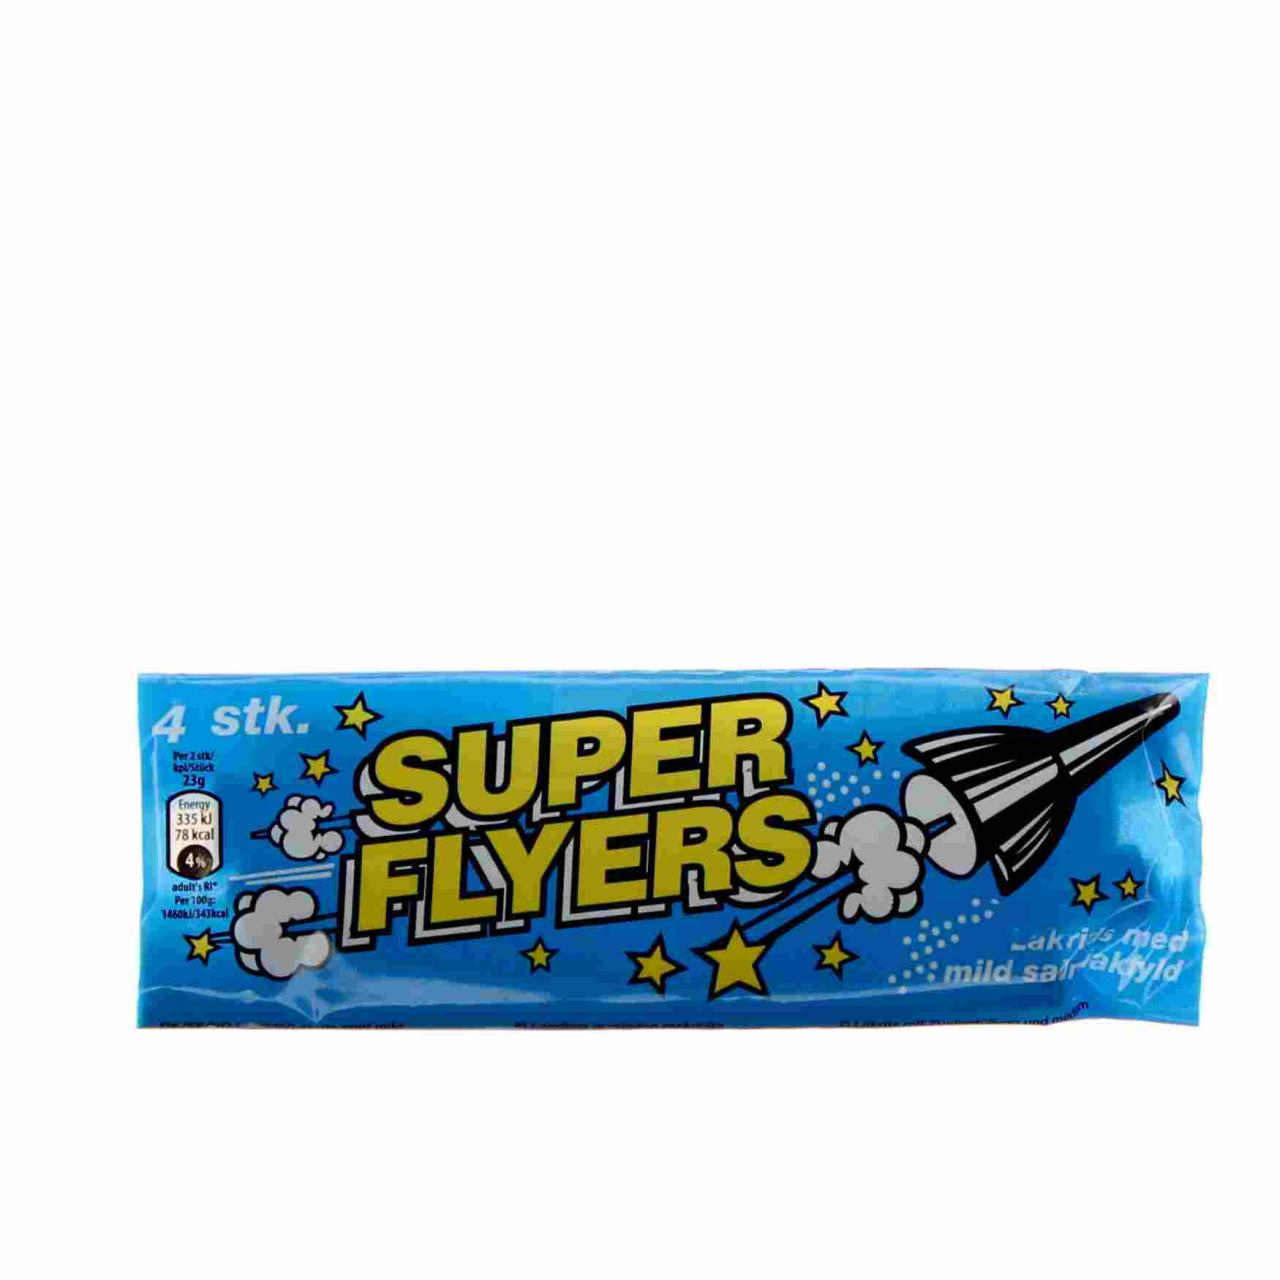 Super Flyers 4-PACK 45g